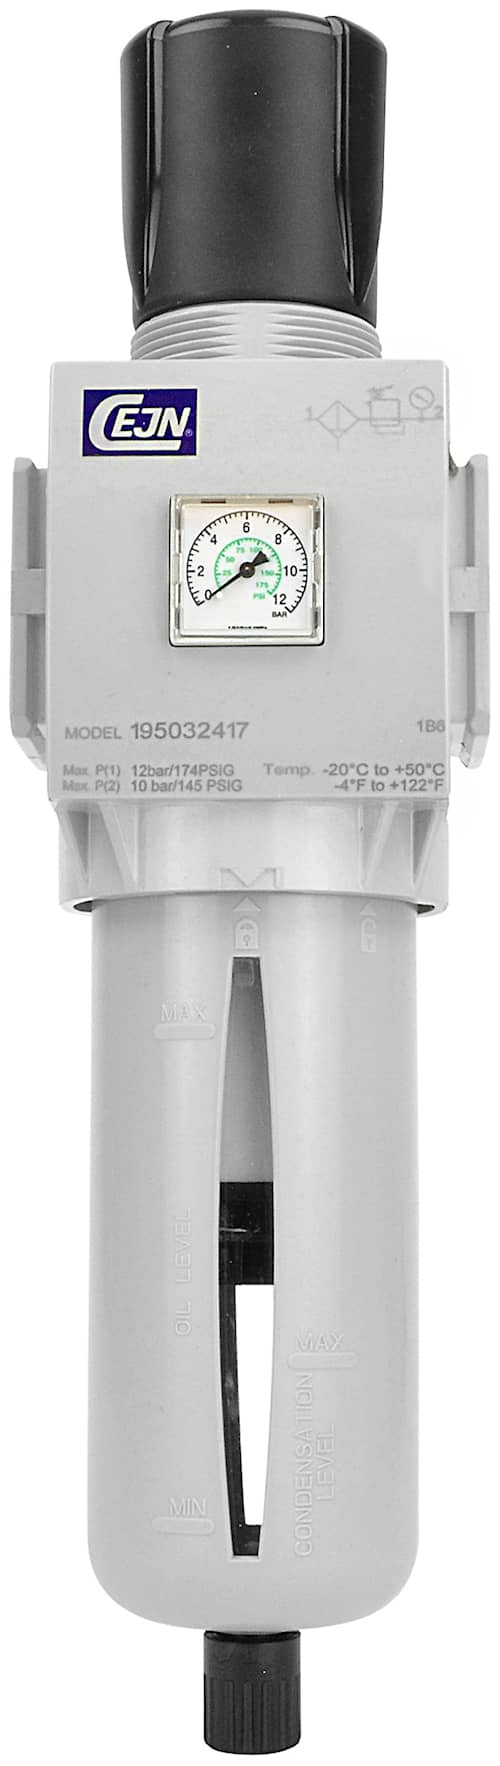 Cejn Reducering/filter Modell 653 G 3/4'' 9000 l/min